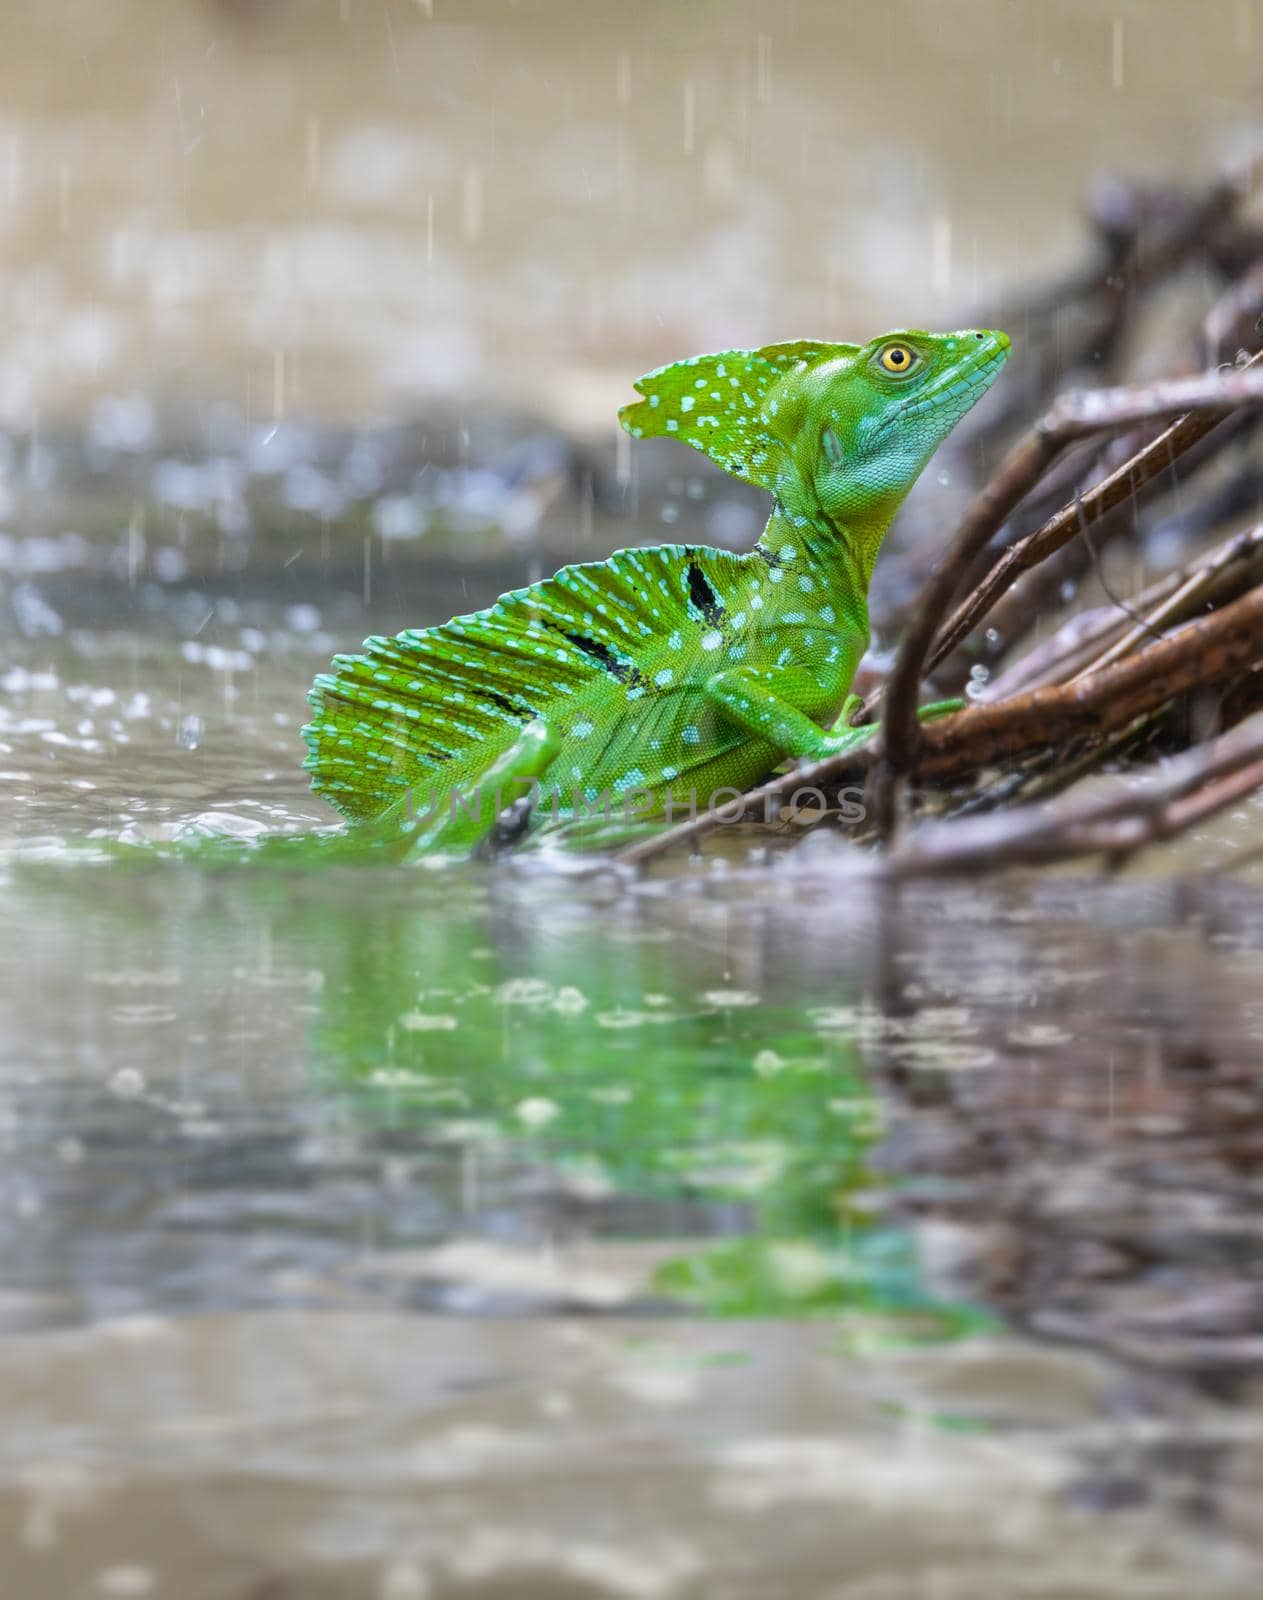 Plumed green basilisk (Basiliscus plumifrons) Cano Negro, Costa Rica wildlife by artush